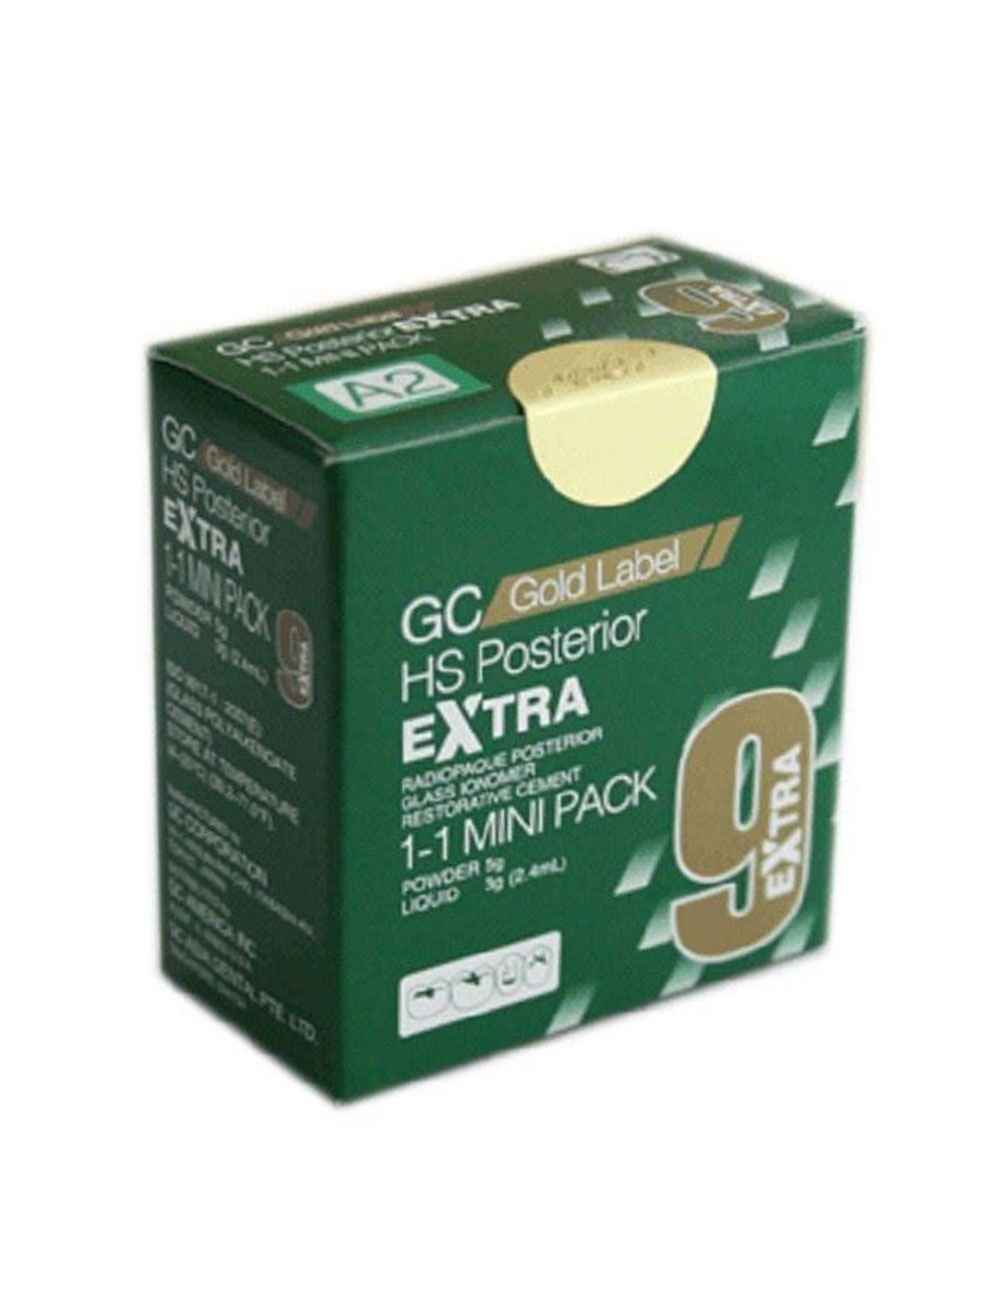 GC Gold Label 9 (Extra) Mini Pack